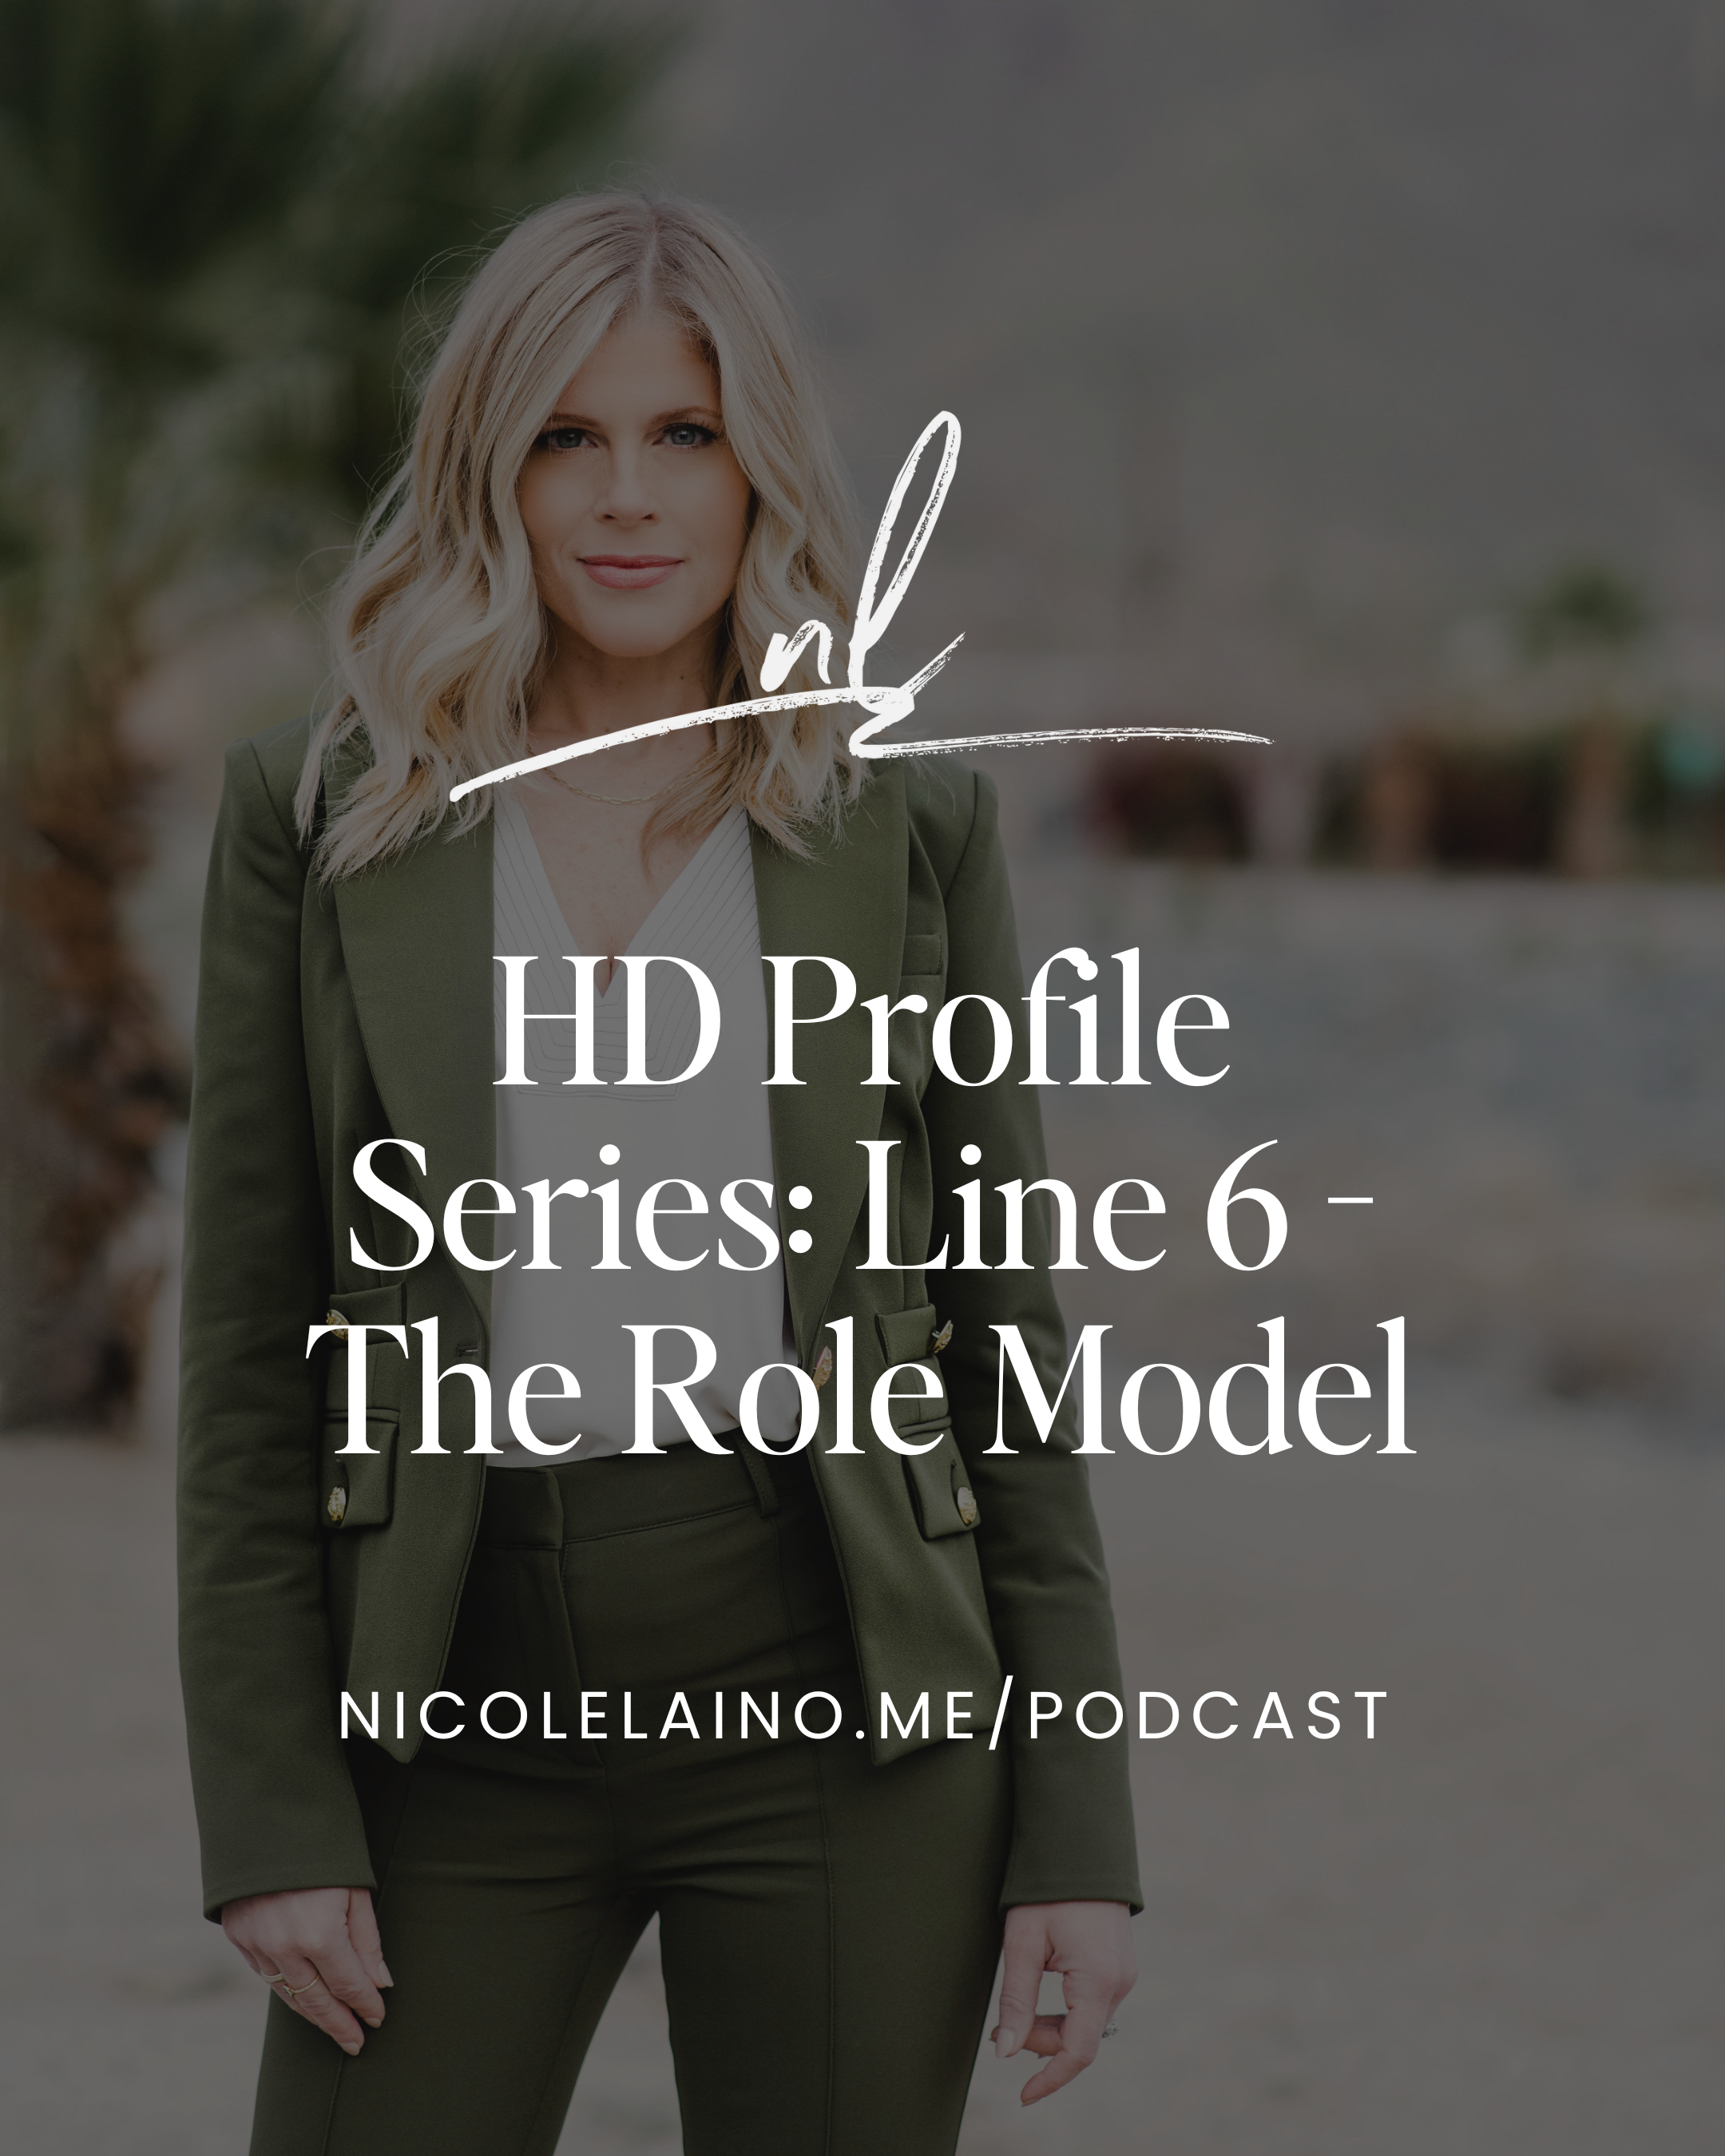 HD Profile Series: Line 6 - The Role Model